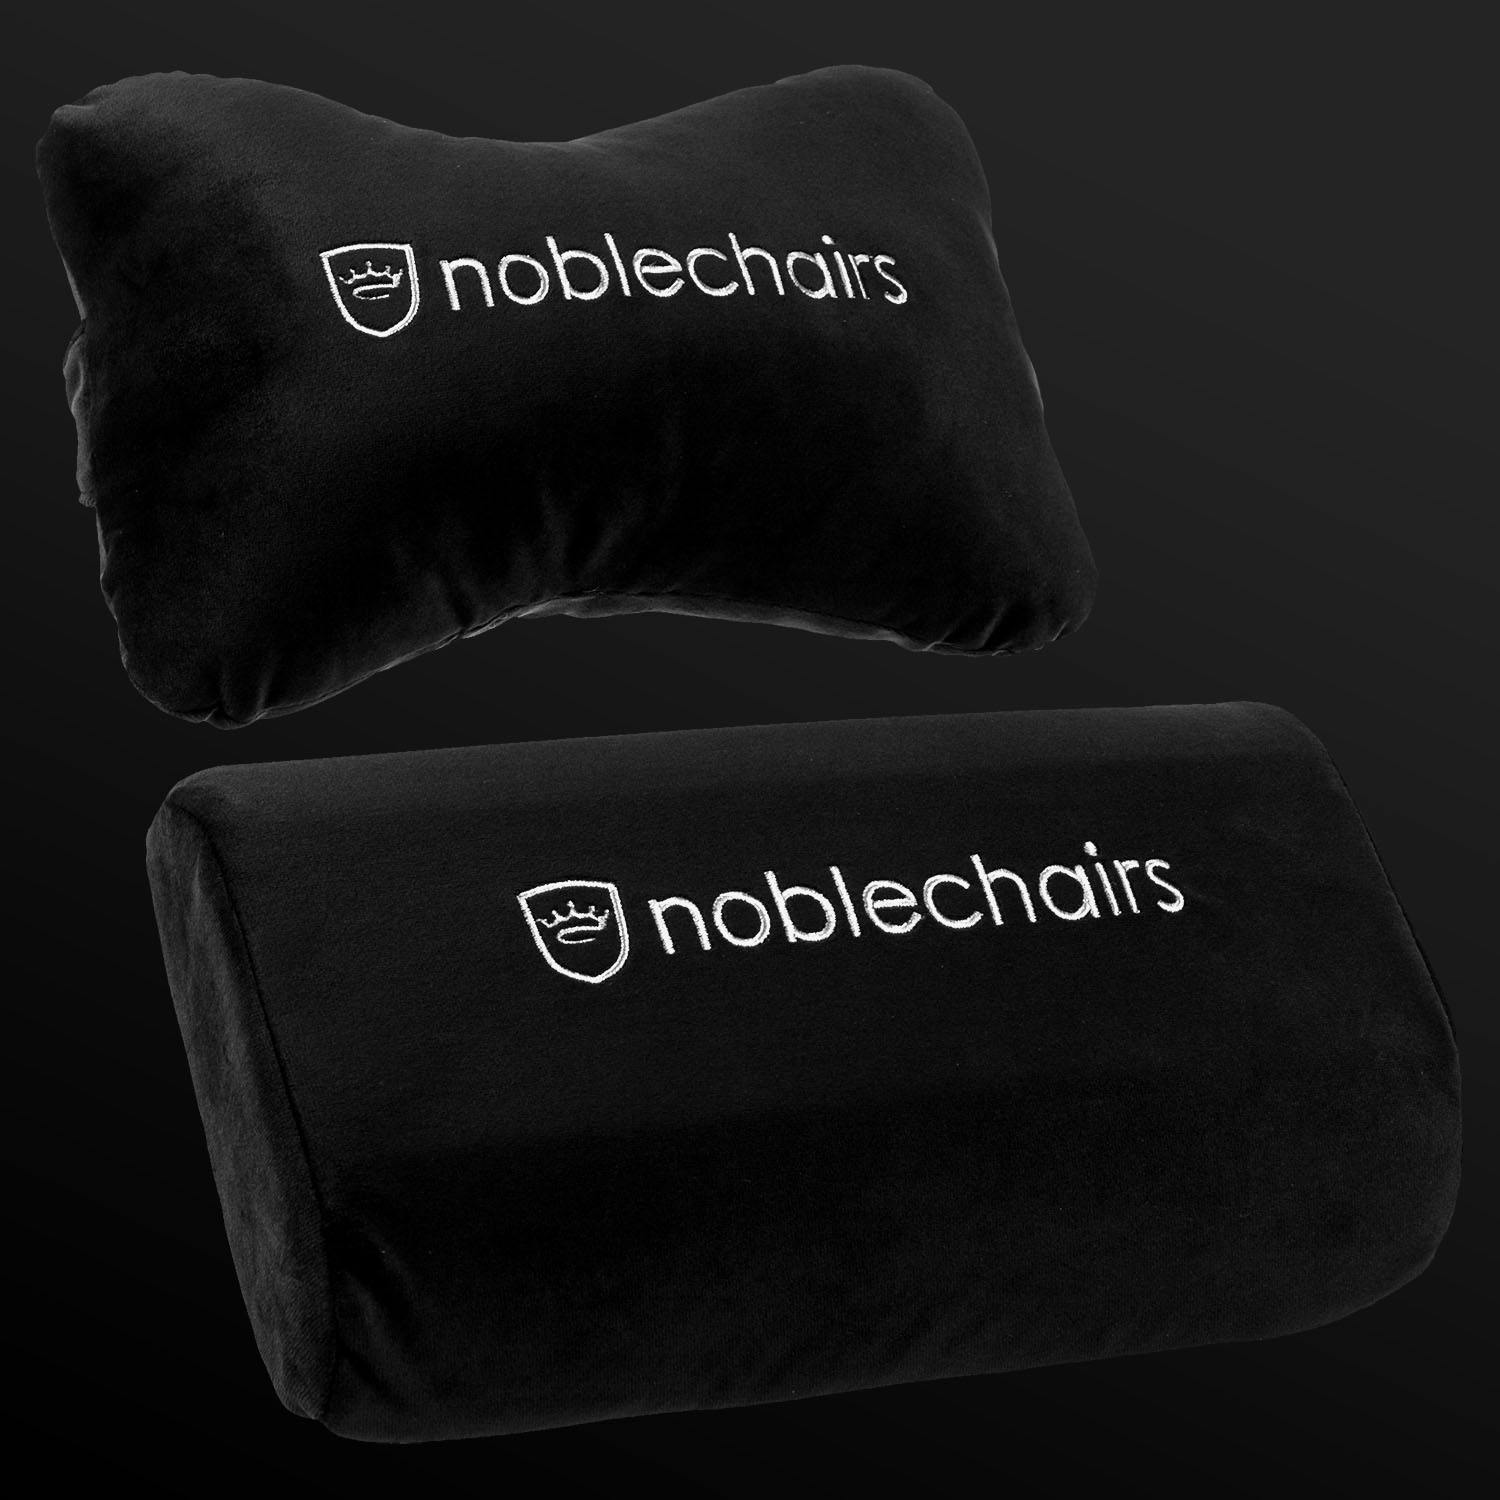 noblechairs - Juego de almohadas Negro/Blanco